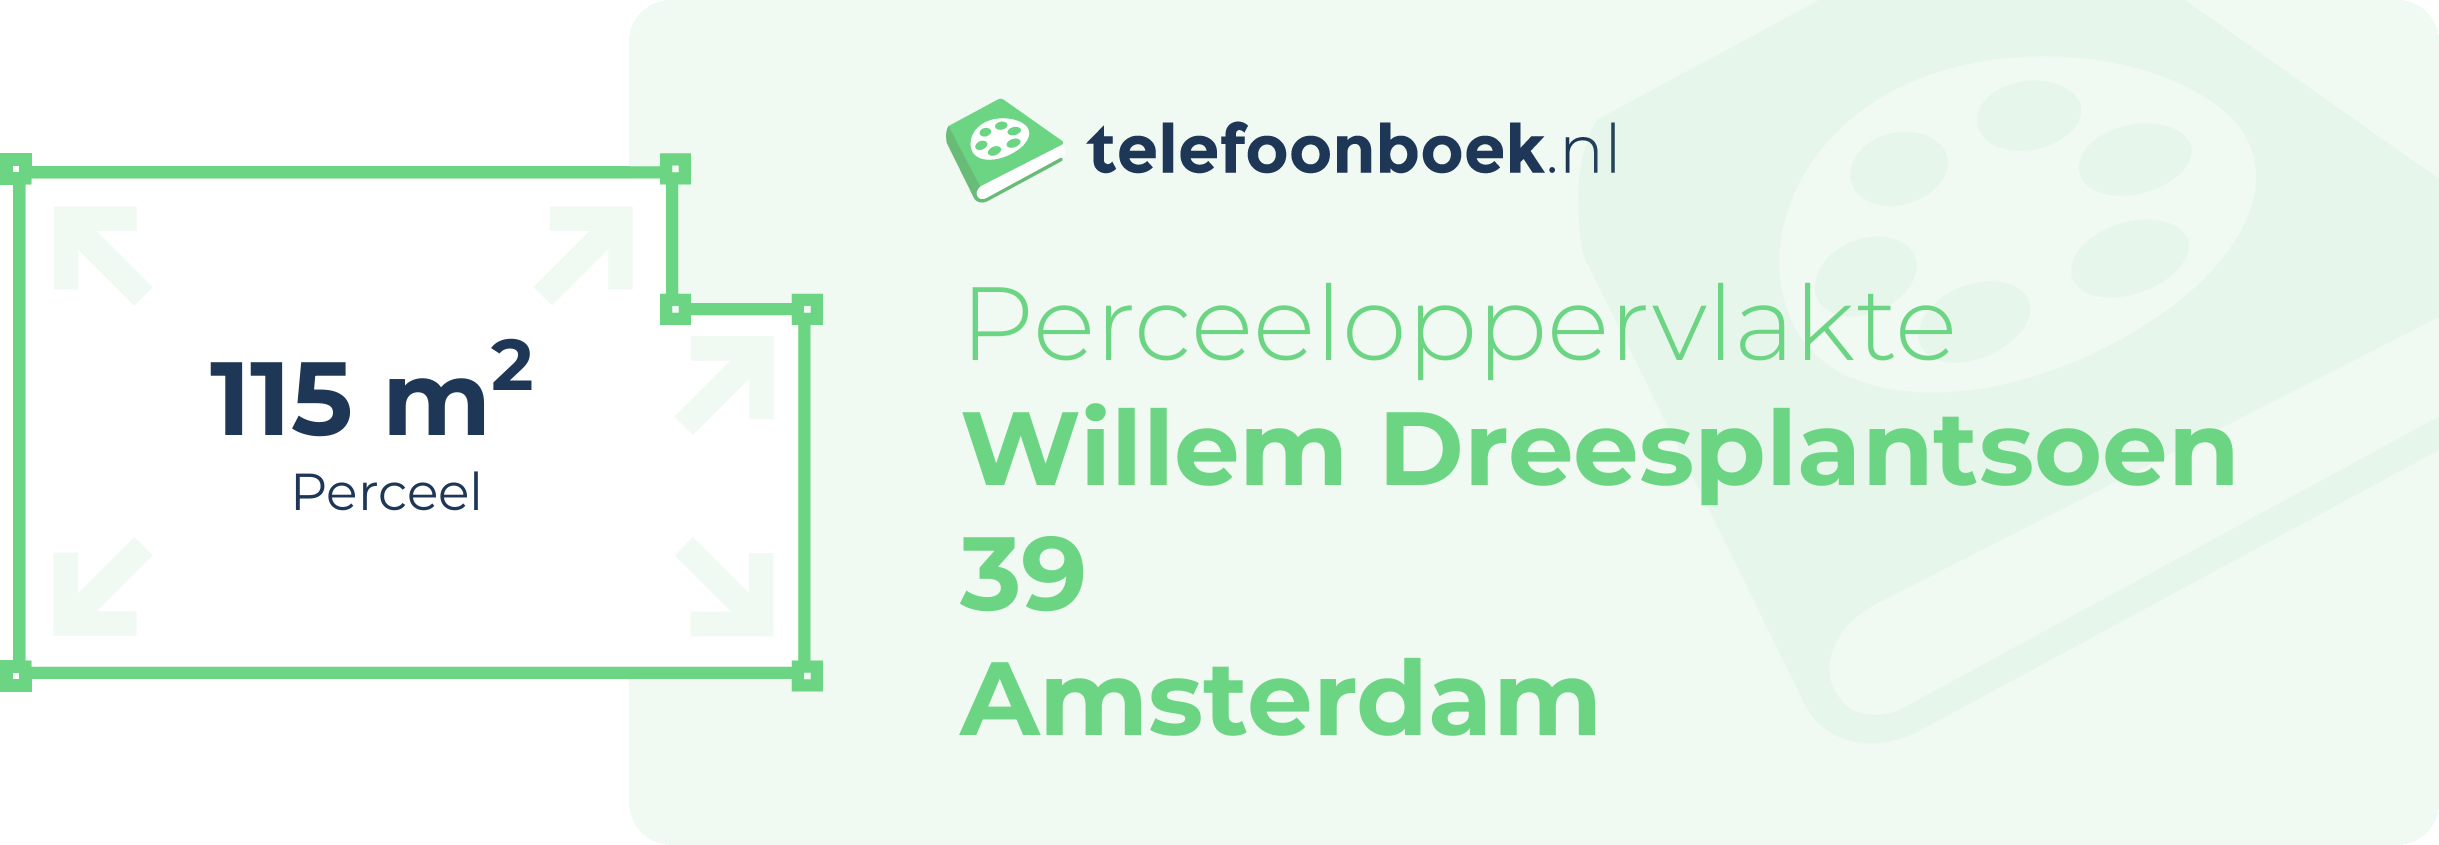 Perceeloppervlakte Willem Dreesplantsoen 39 Amsterdam